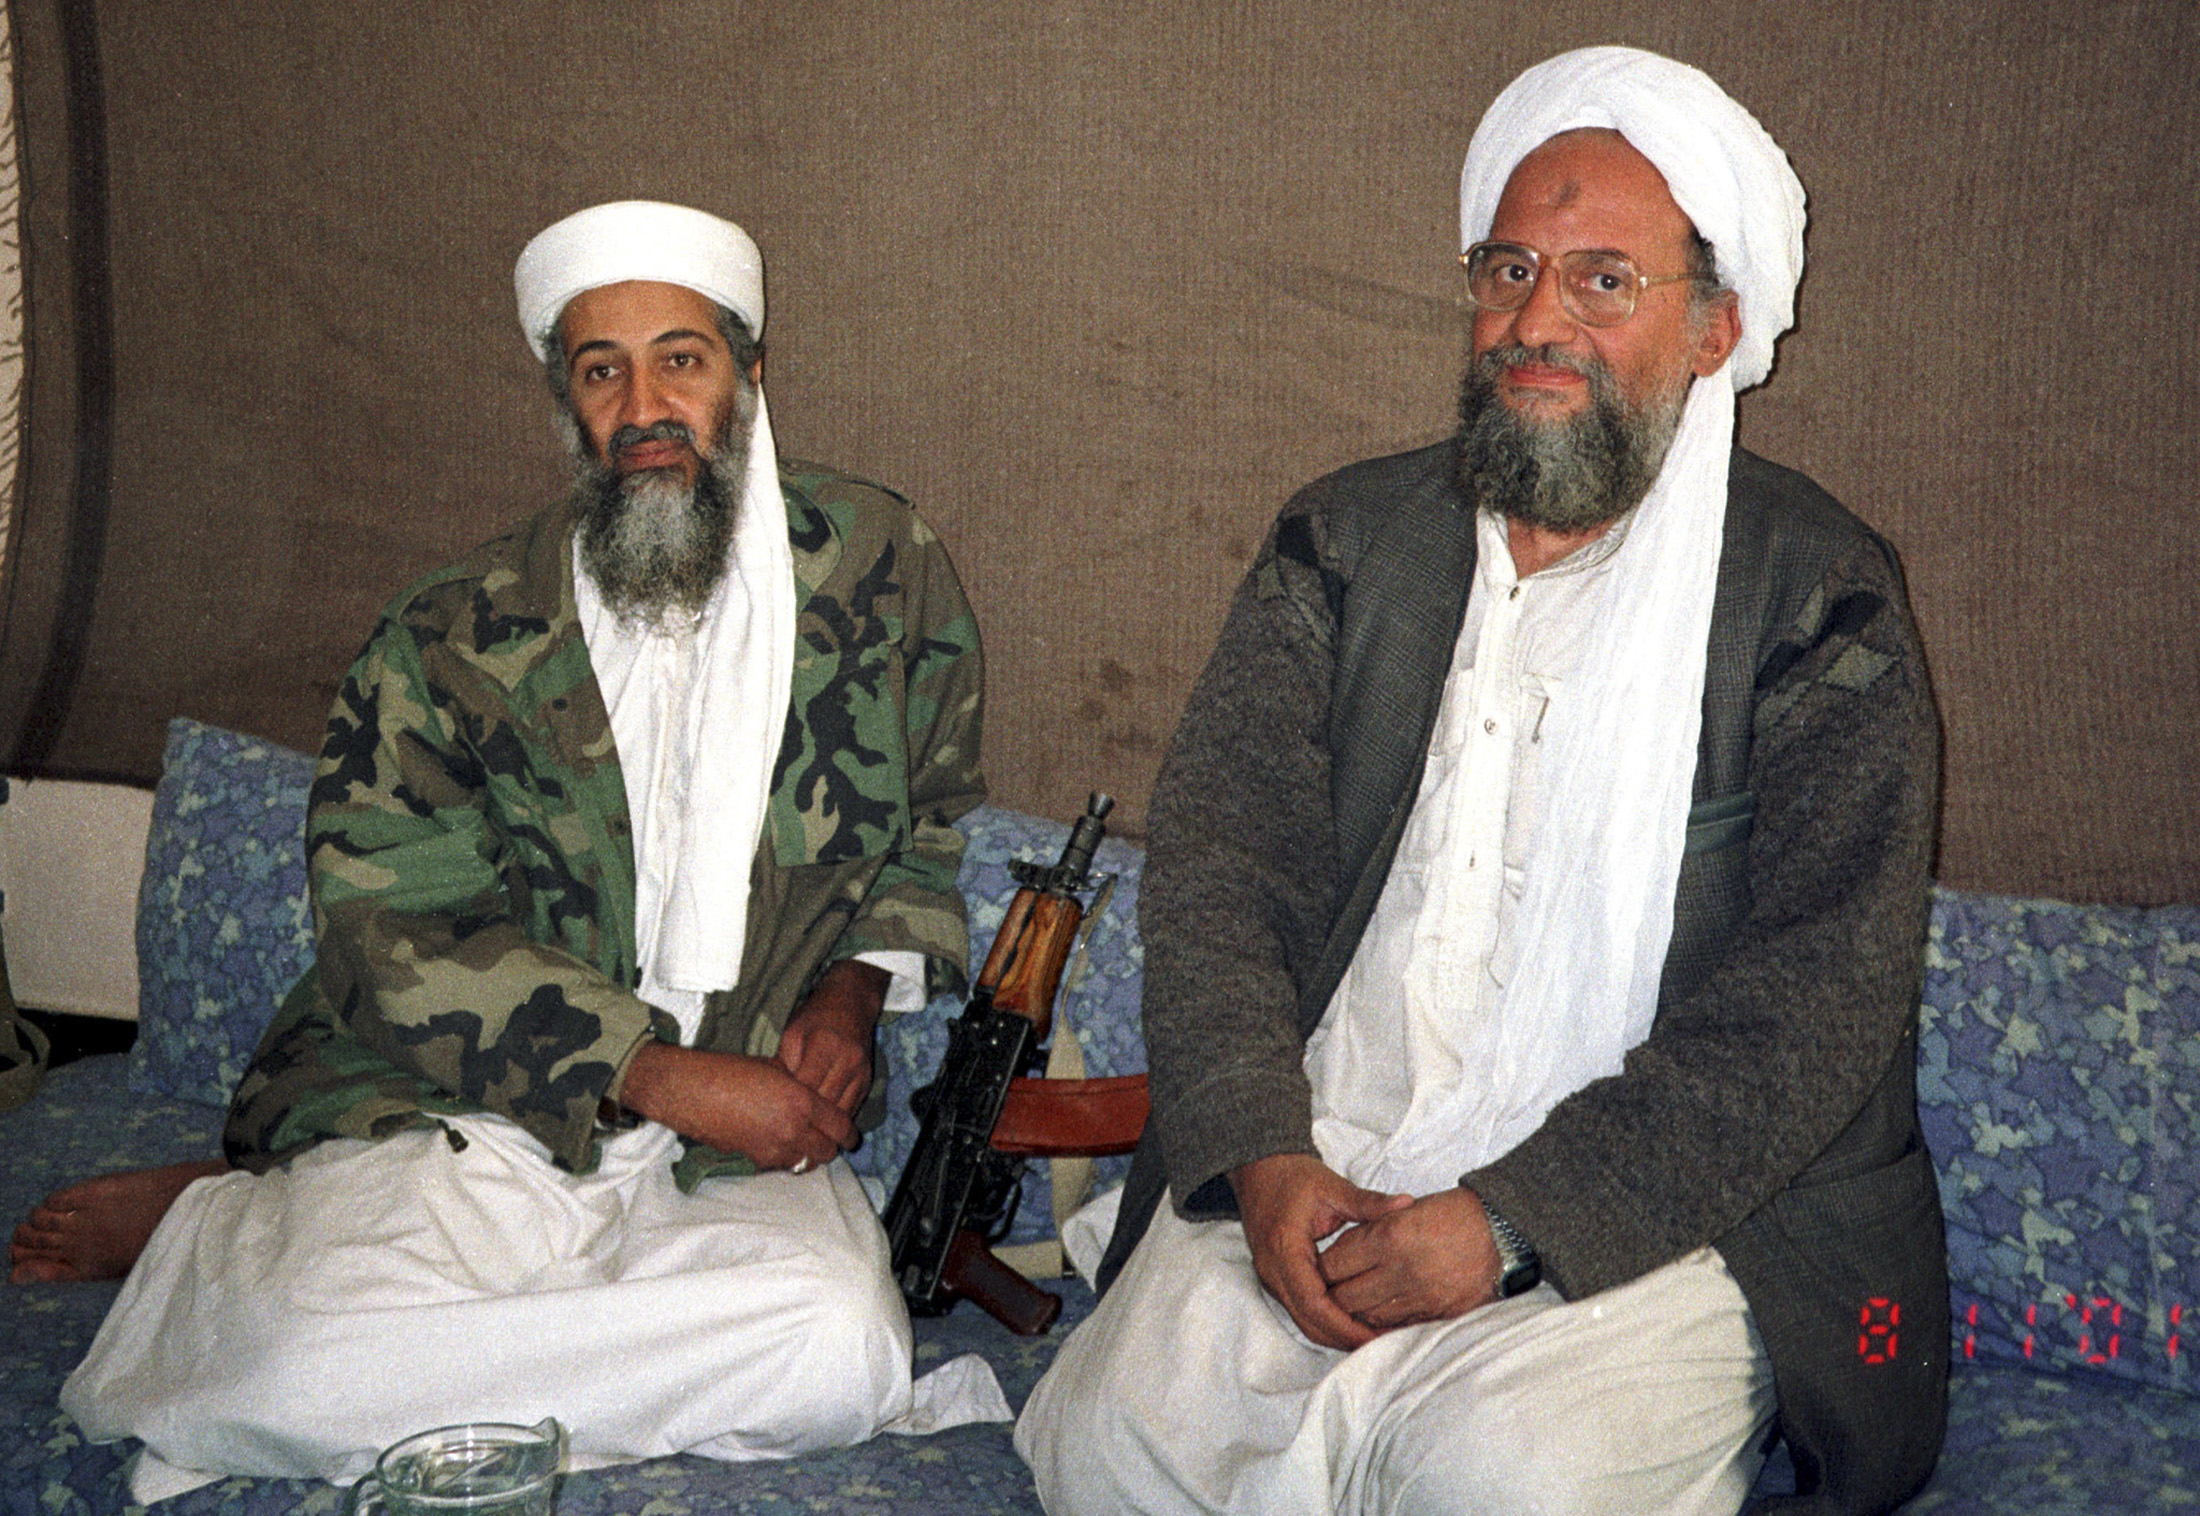 The death of Ayman al-Zawahri and the future of al-Qaida